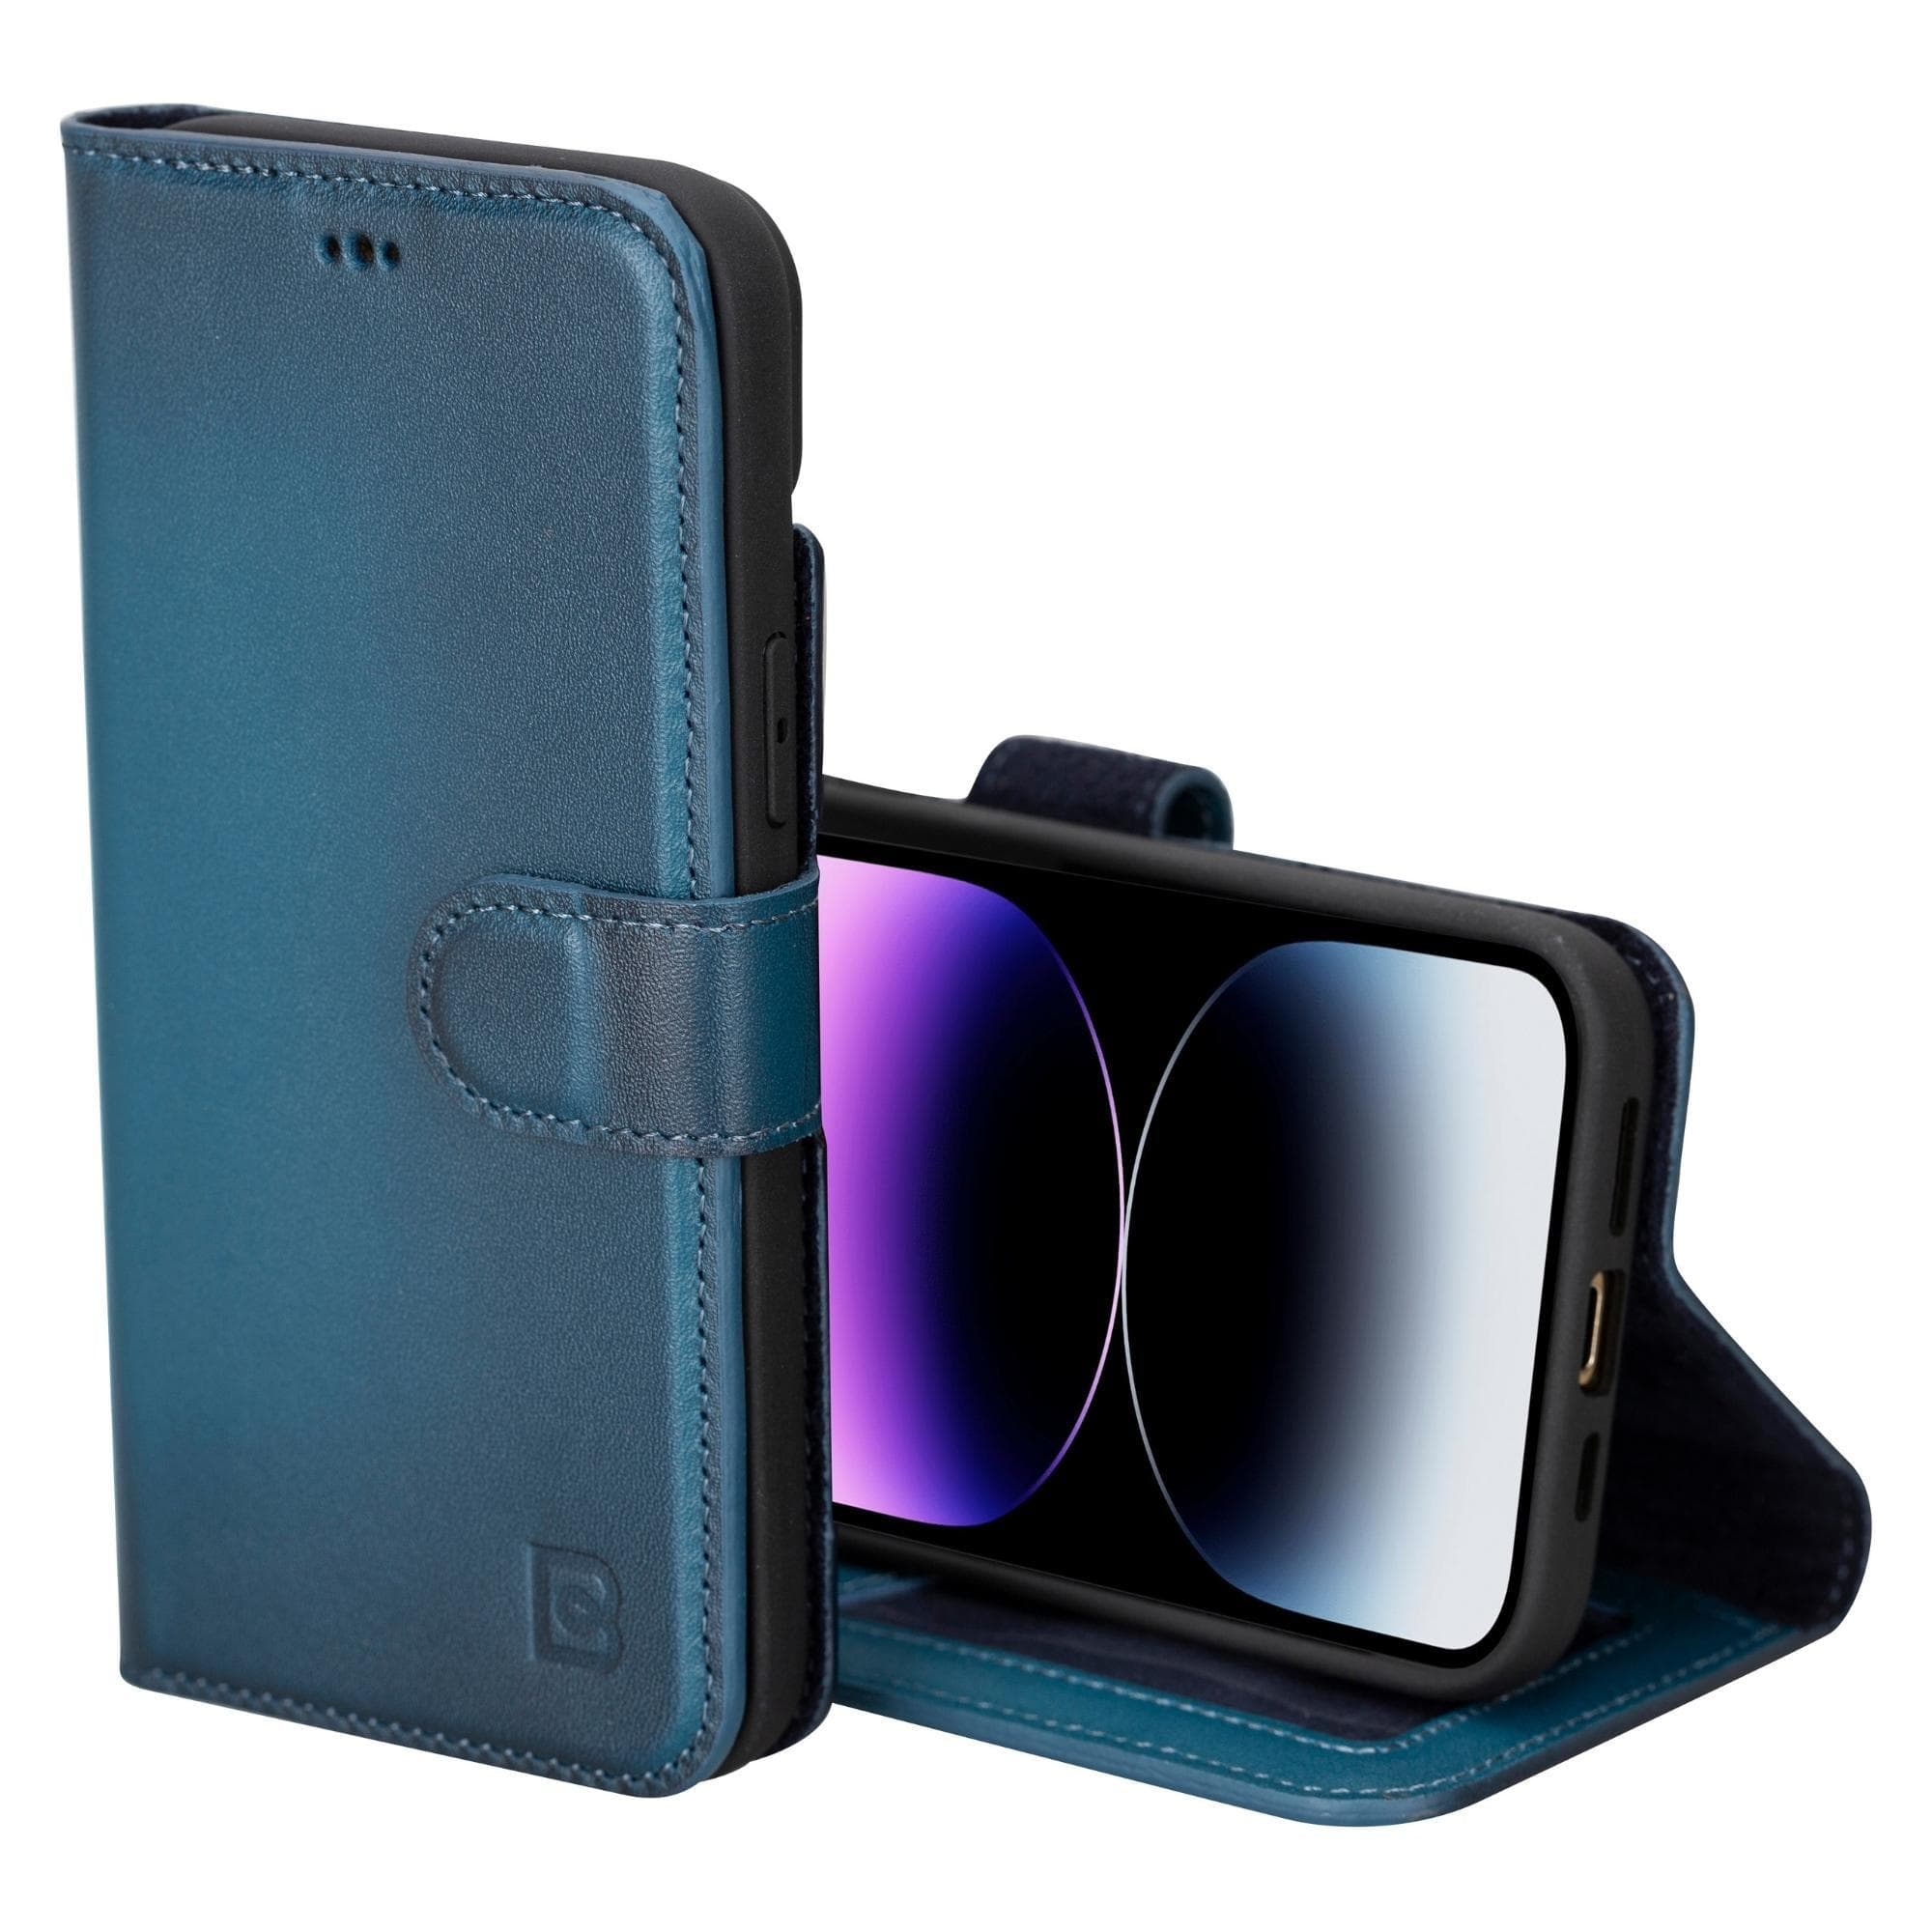 Luxury leather iPhone case